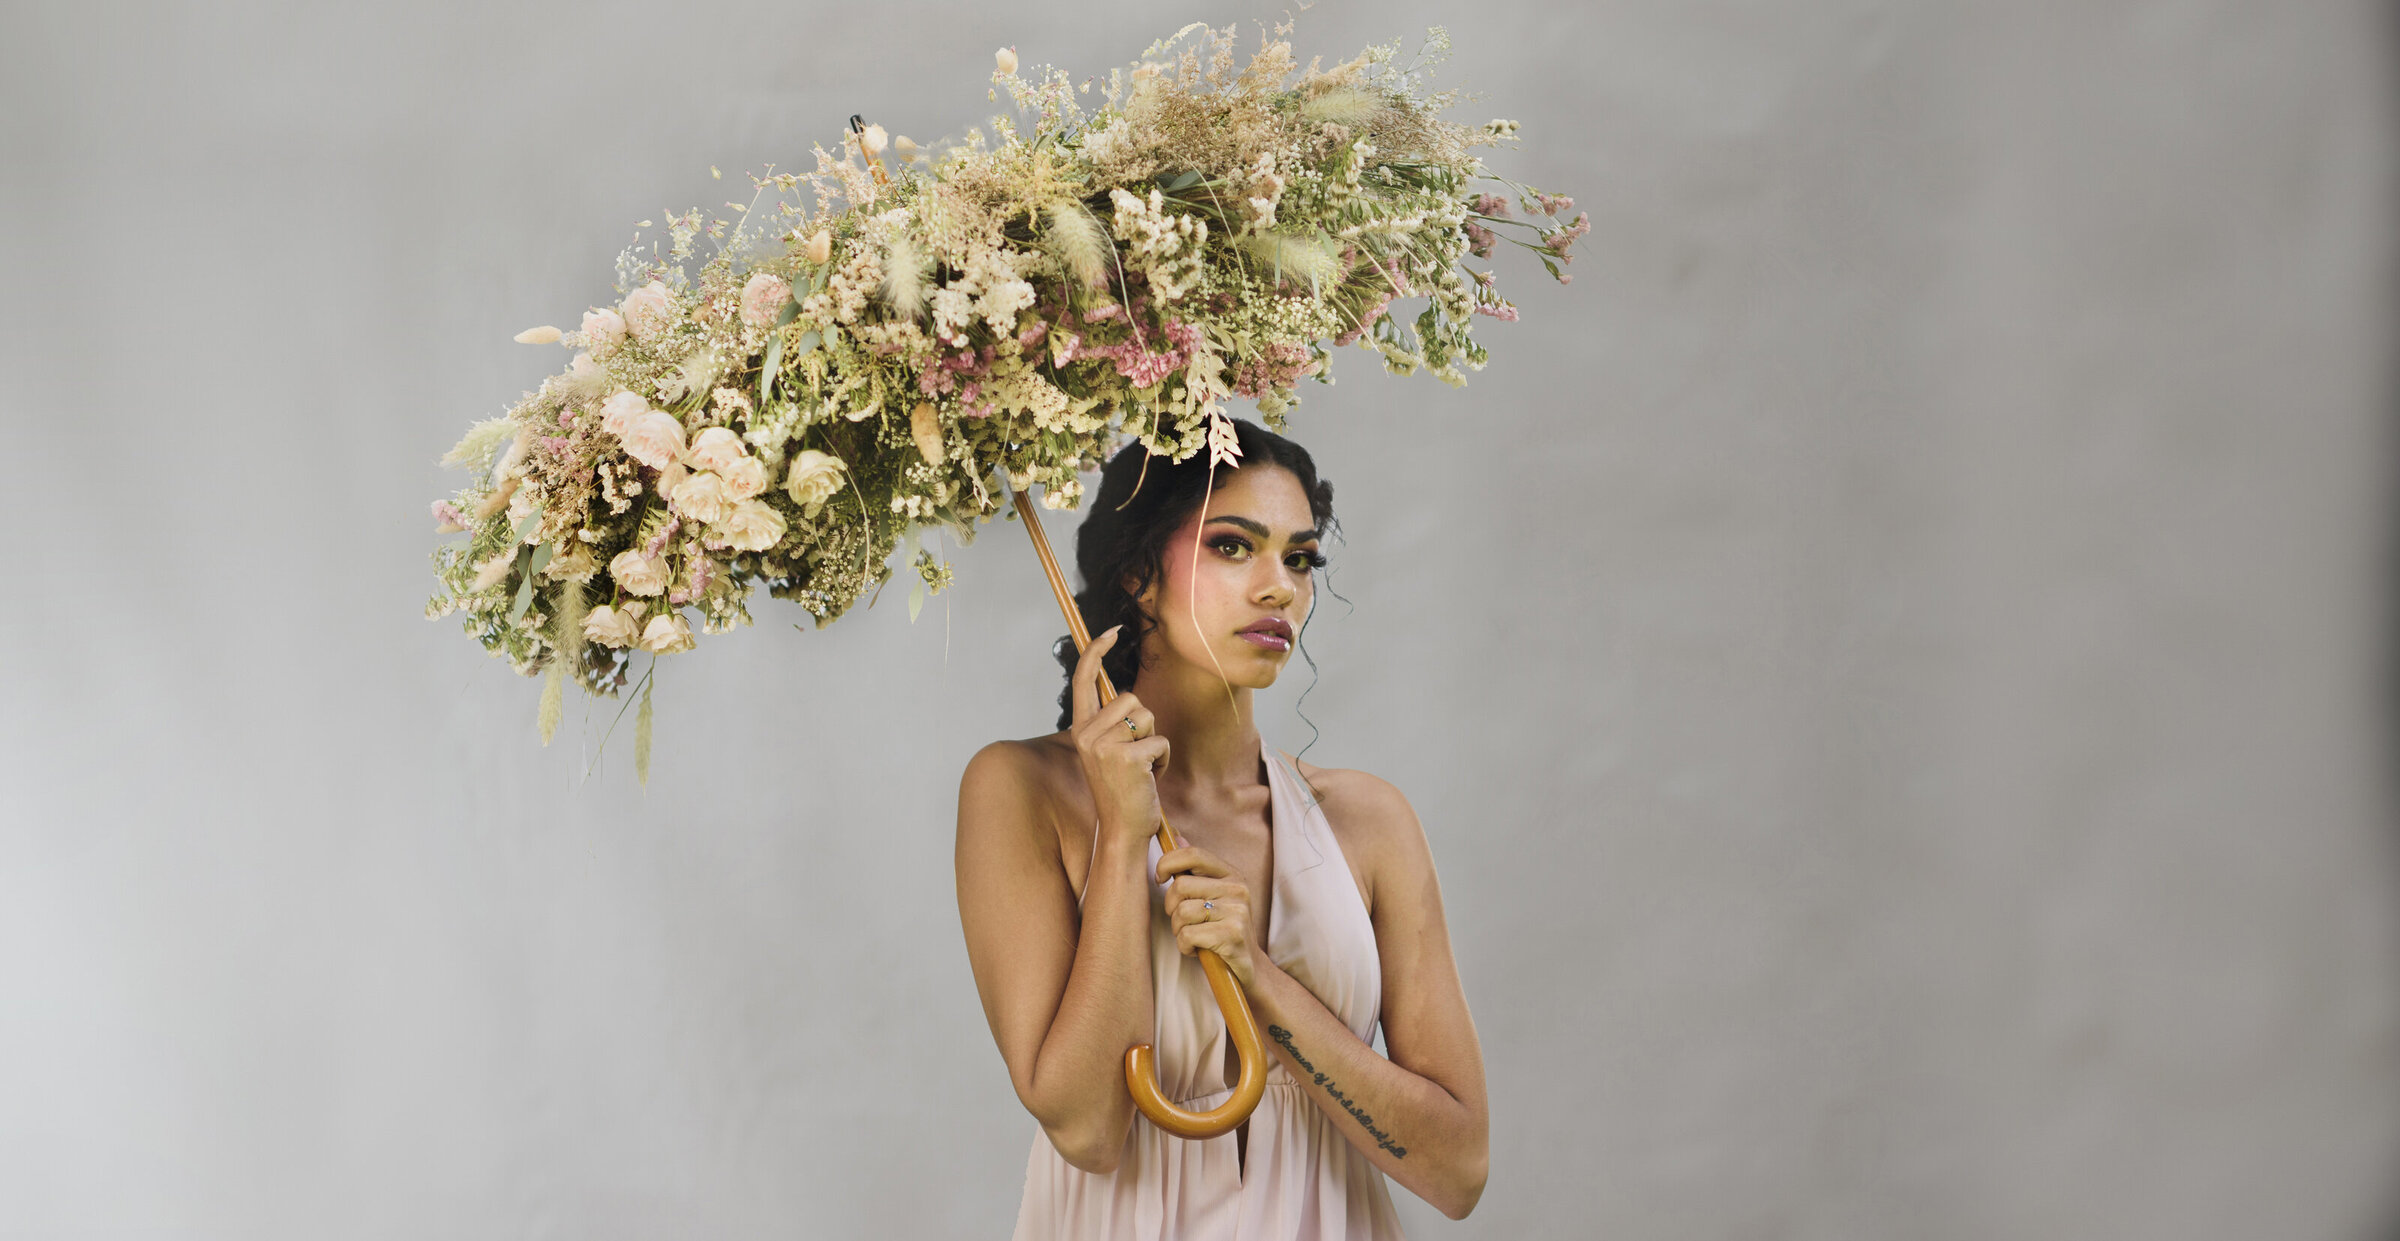 Model holding floral umbrella - floral artistry -Fleuris Studio & Blooms - photo by Helene Cyr